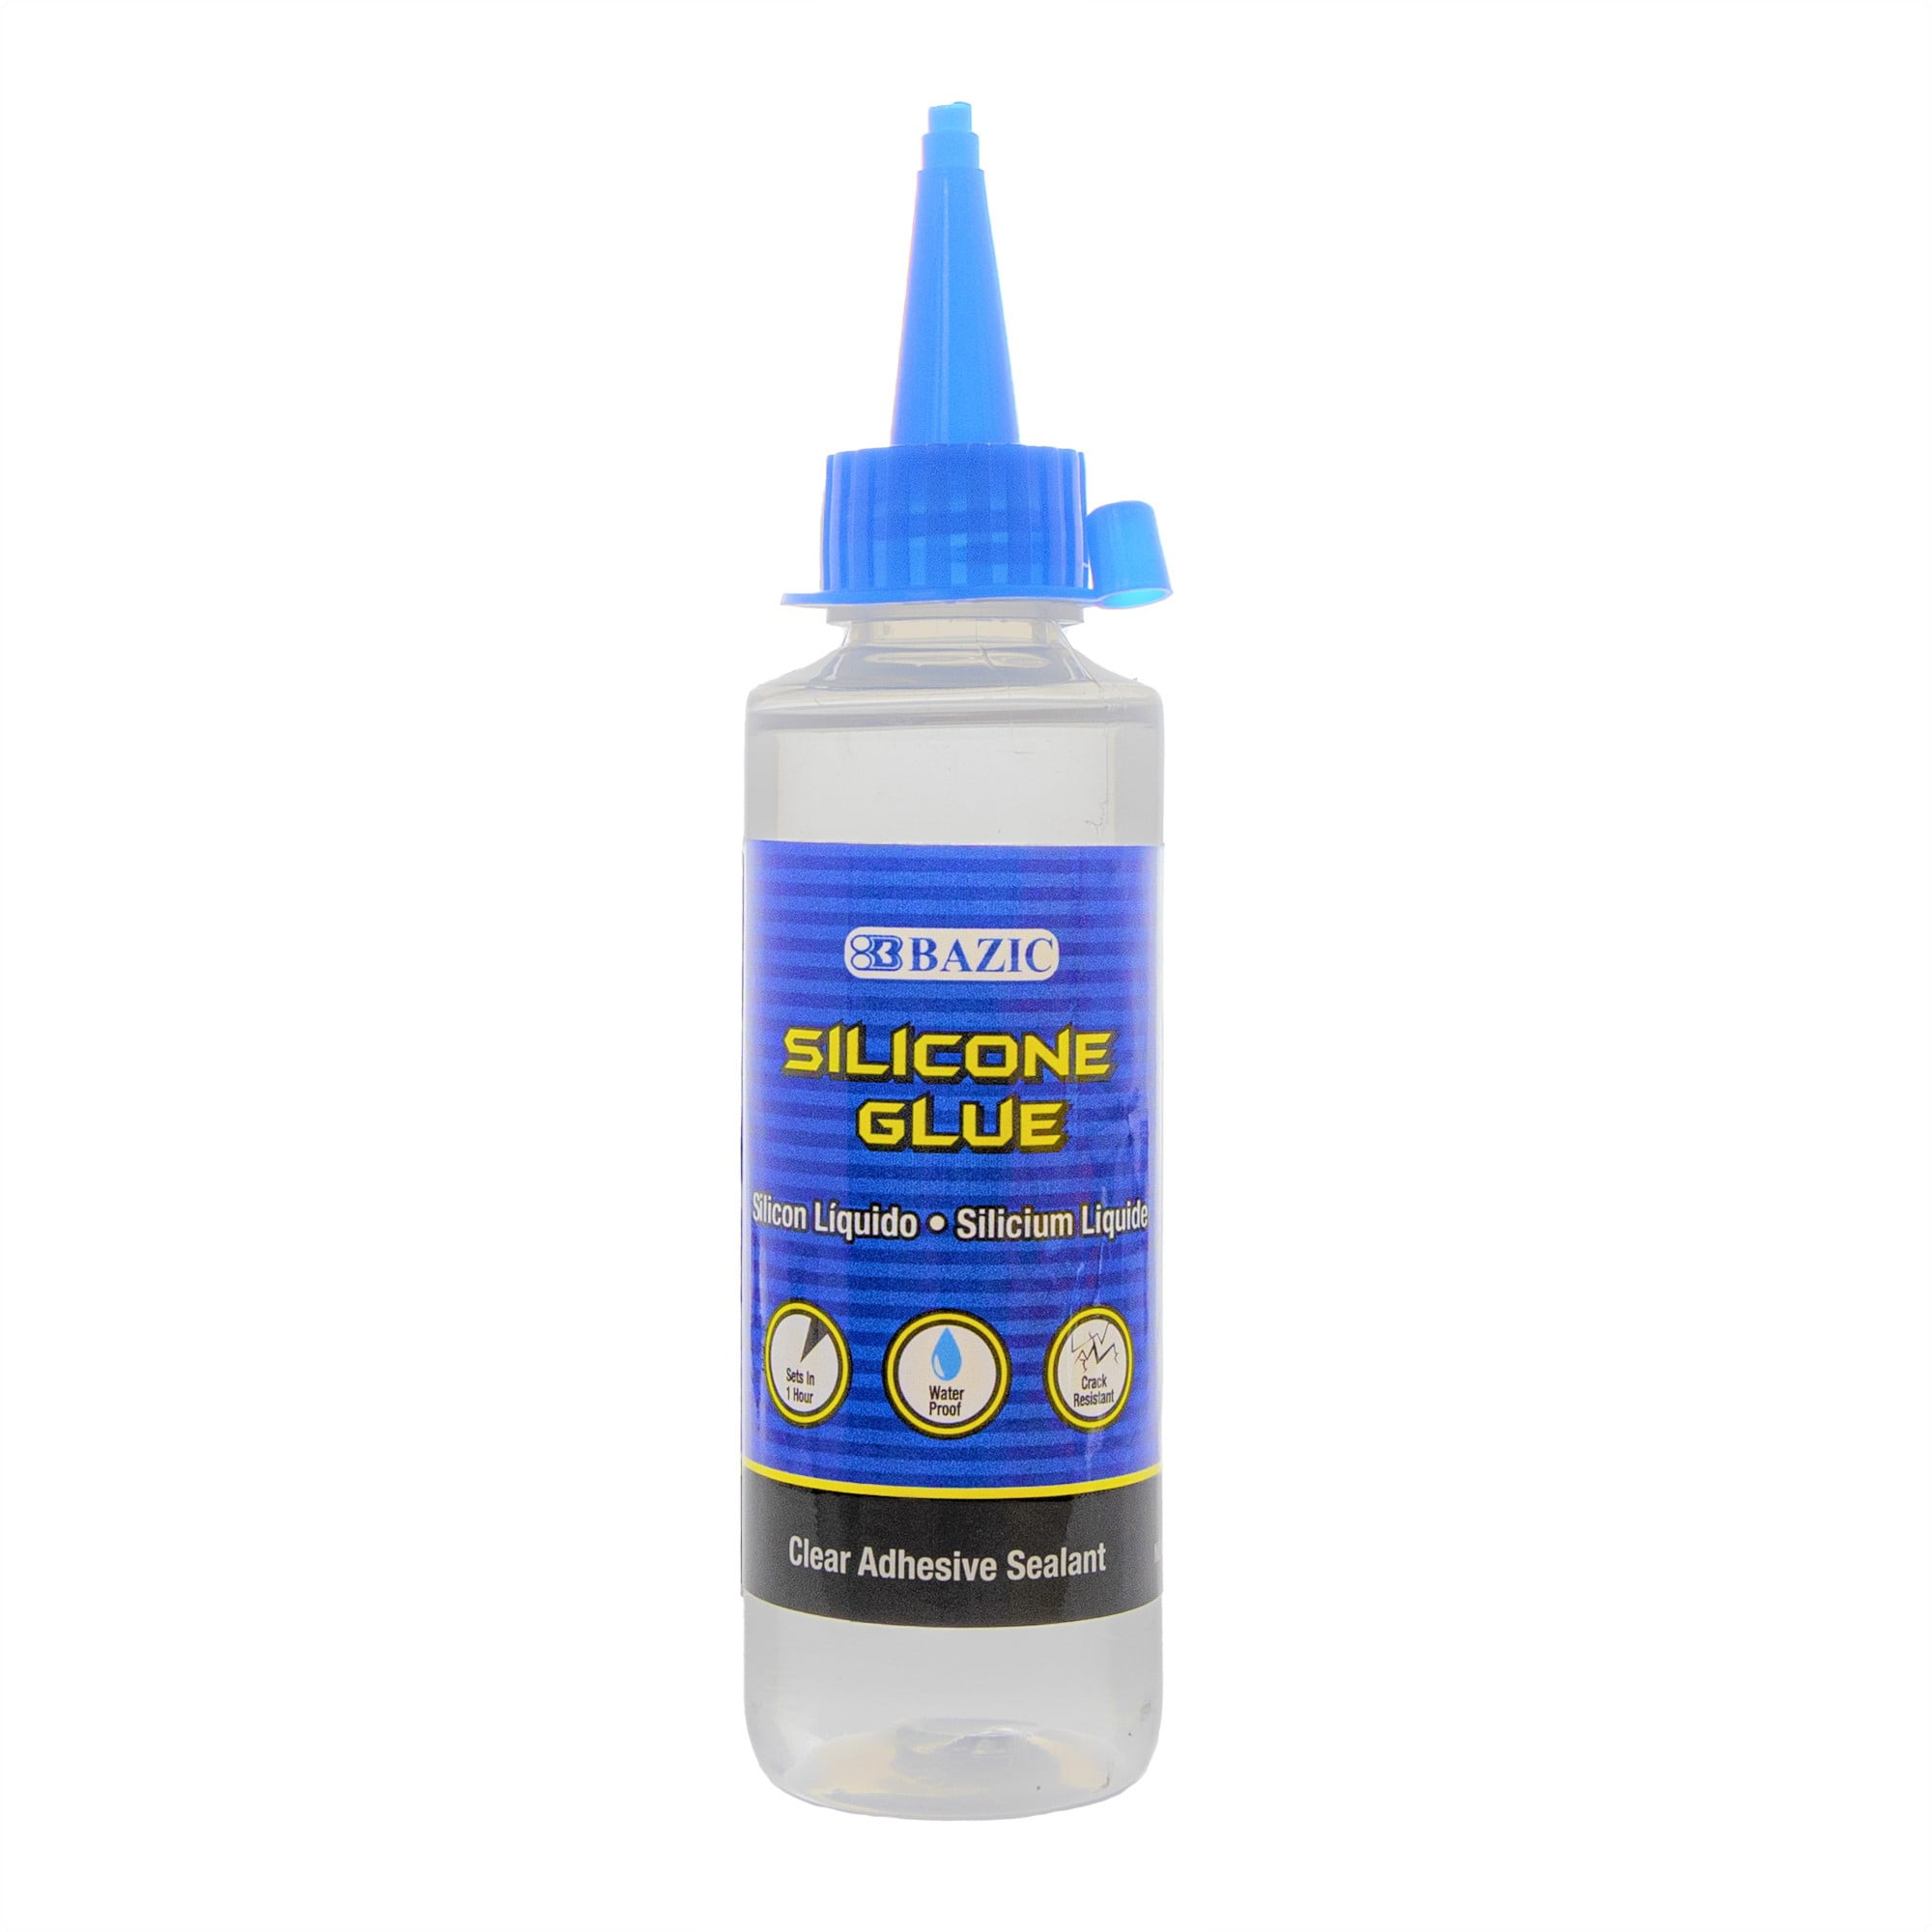 BAZIC Silicone Glue 3.38Oz (100 mL), Waterproof Crack Resistant, 1-Pack